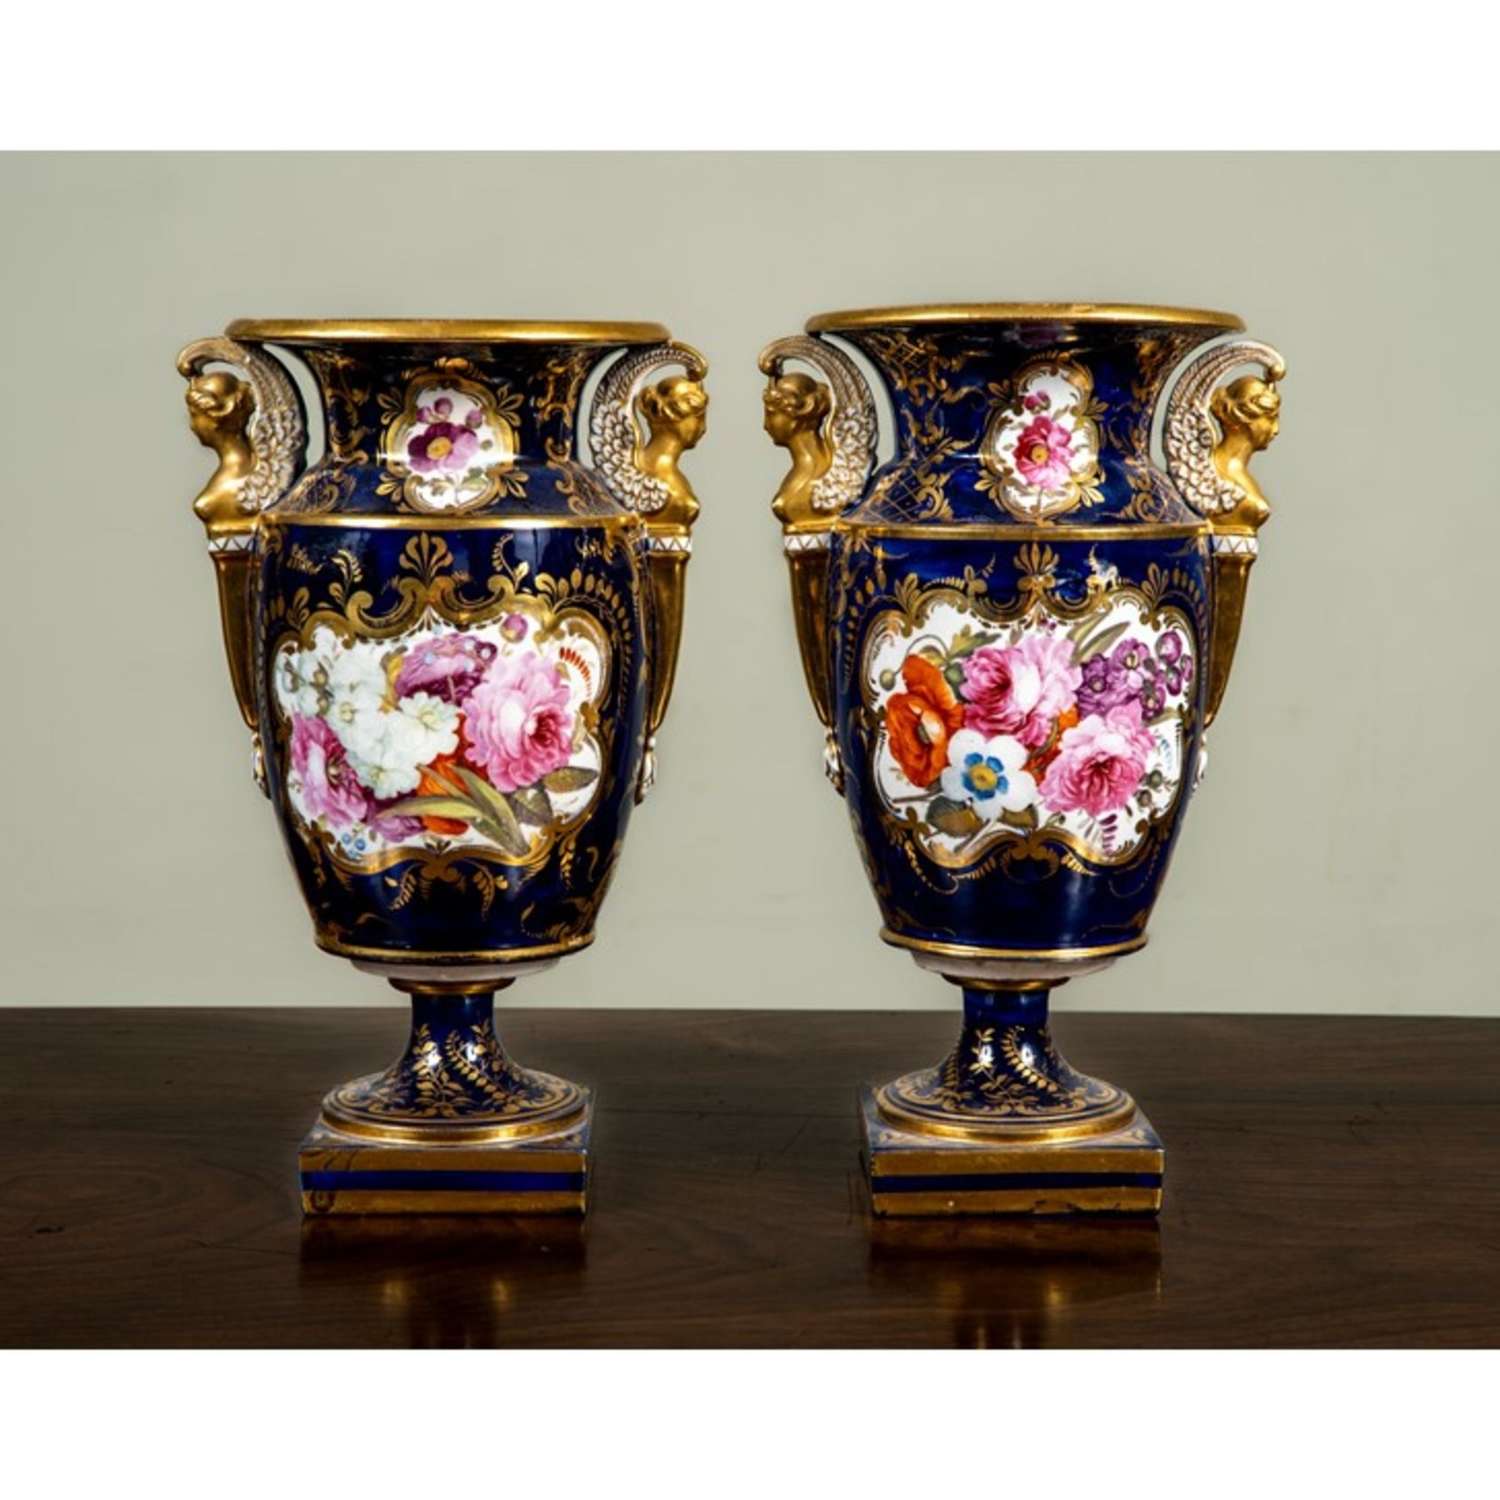 A pair of Coalport-style vases